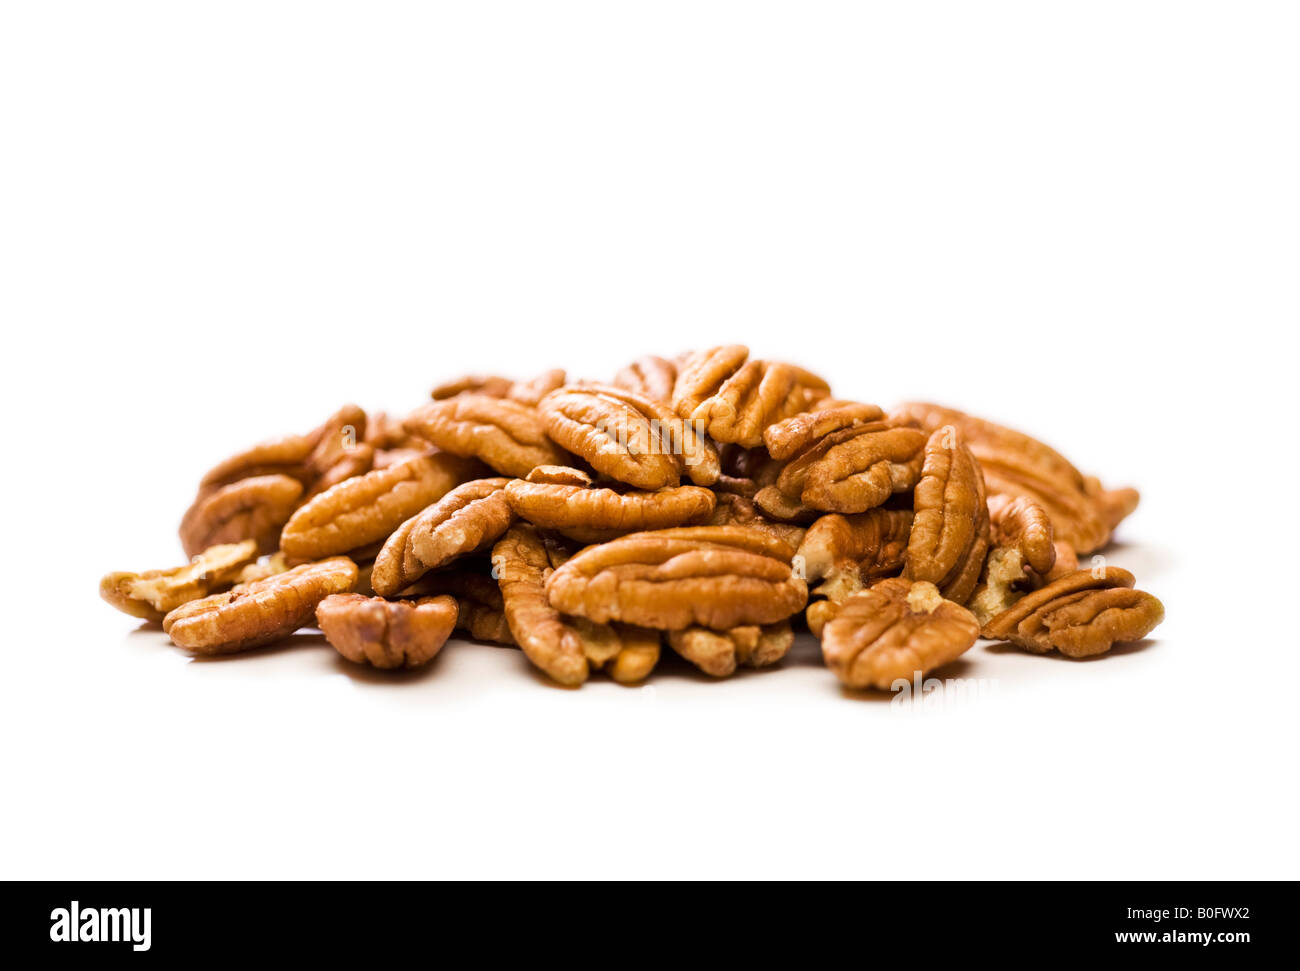 Pile of Pecan nut kernels Stock Photo